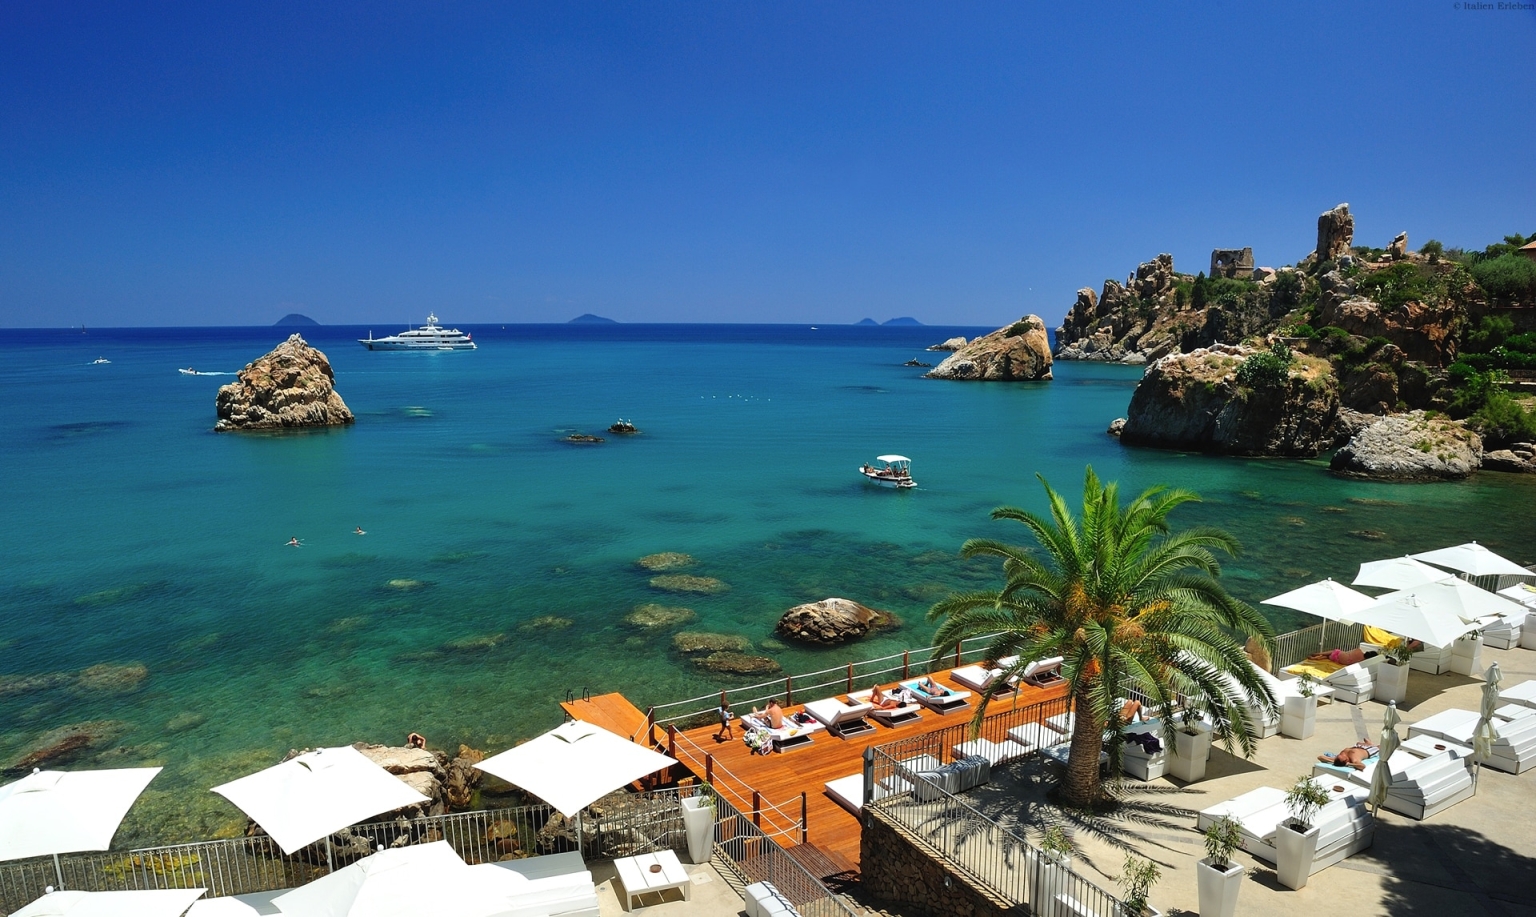 Sizilien Hotel Le Calette Cefalu Meer Resort Anlage Park Garten Bucht Meerzugang Meerblick Sonnendeck